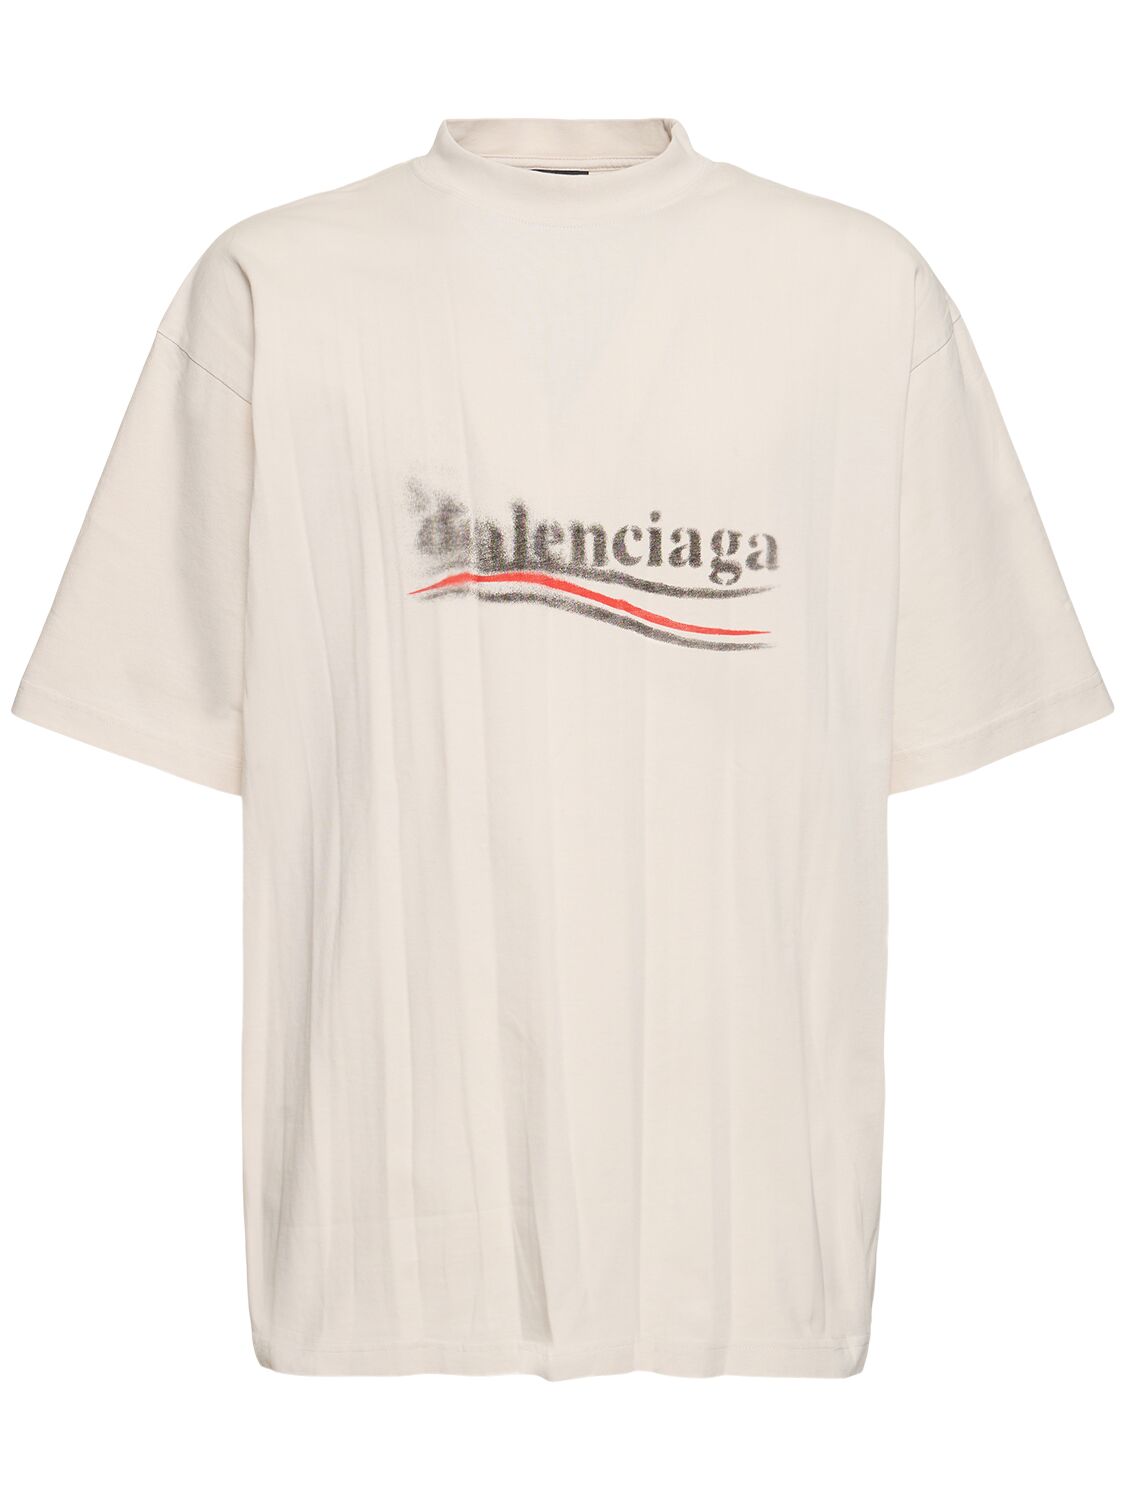 T-shirt Aus Baumwolle Mit Political-logodruck - BALENCIAGA - Modalova